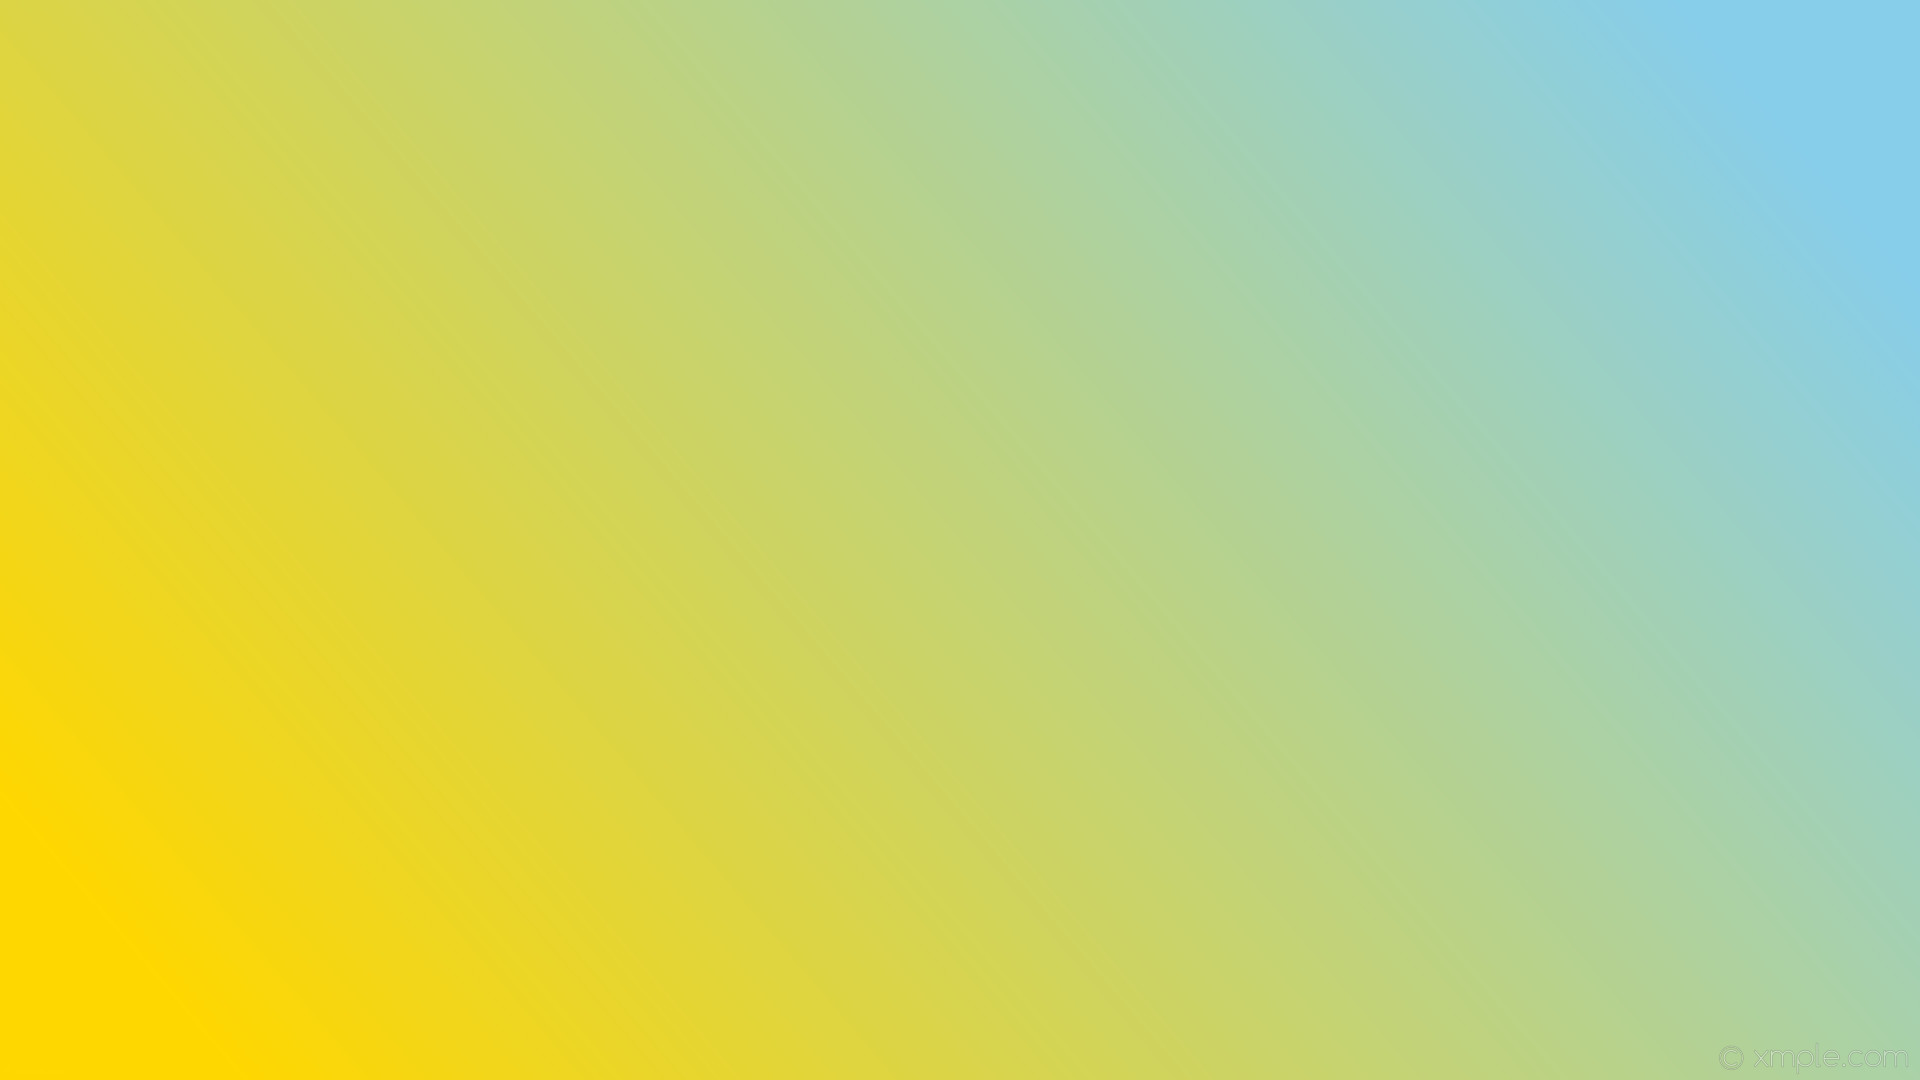 1920x1080 wallpaper linear gradient yellow blue gold sky blue #ffd700 #87ceeb 195Â°